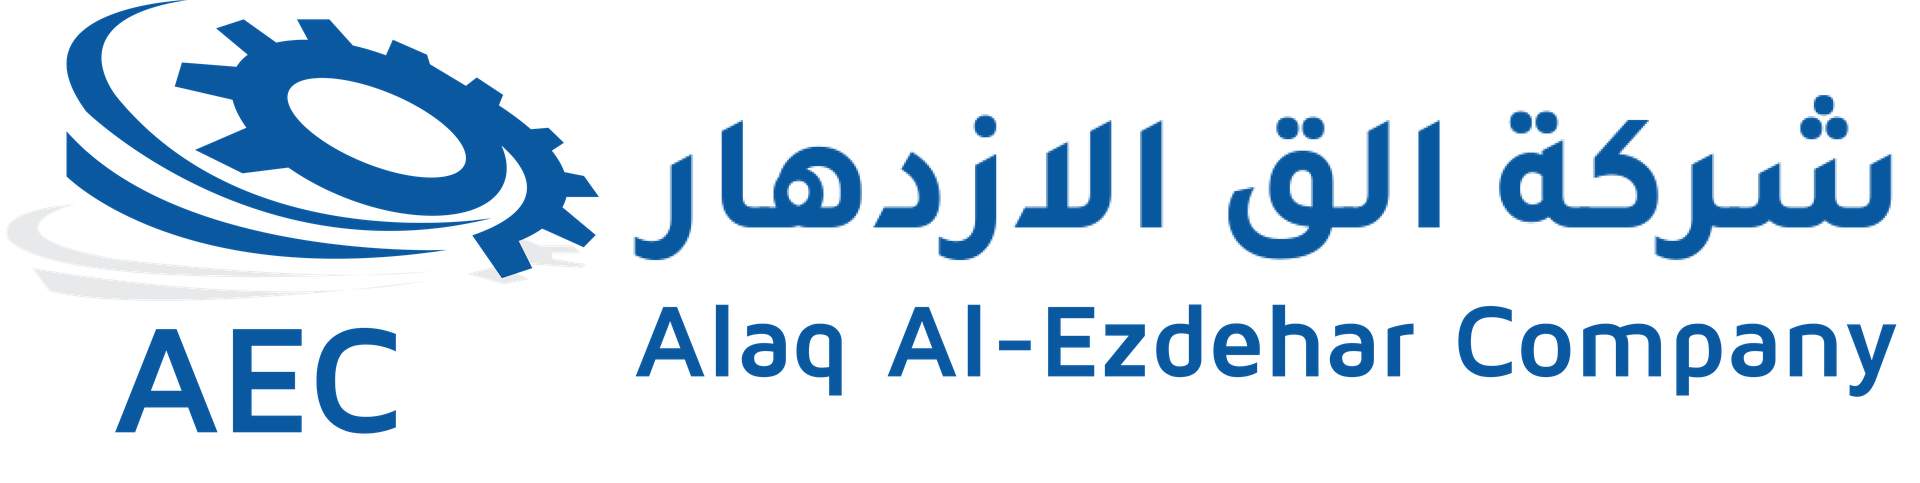 AEC - Alaq Alezdehar Construction